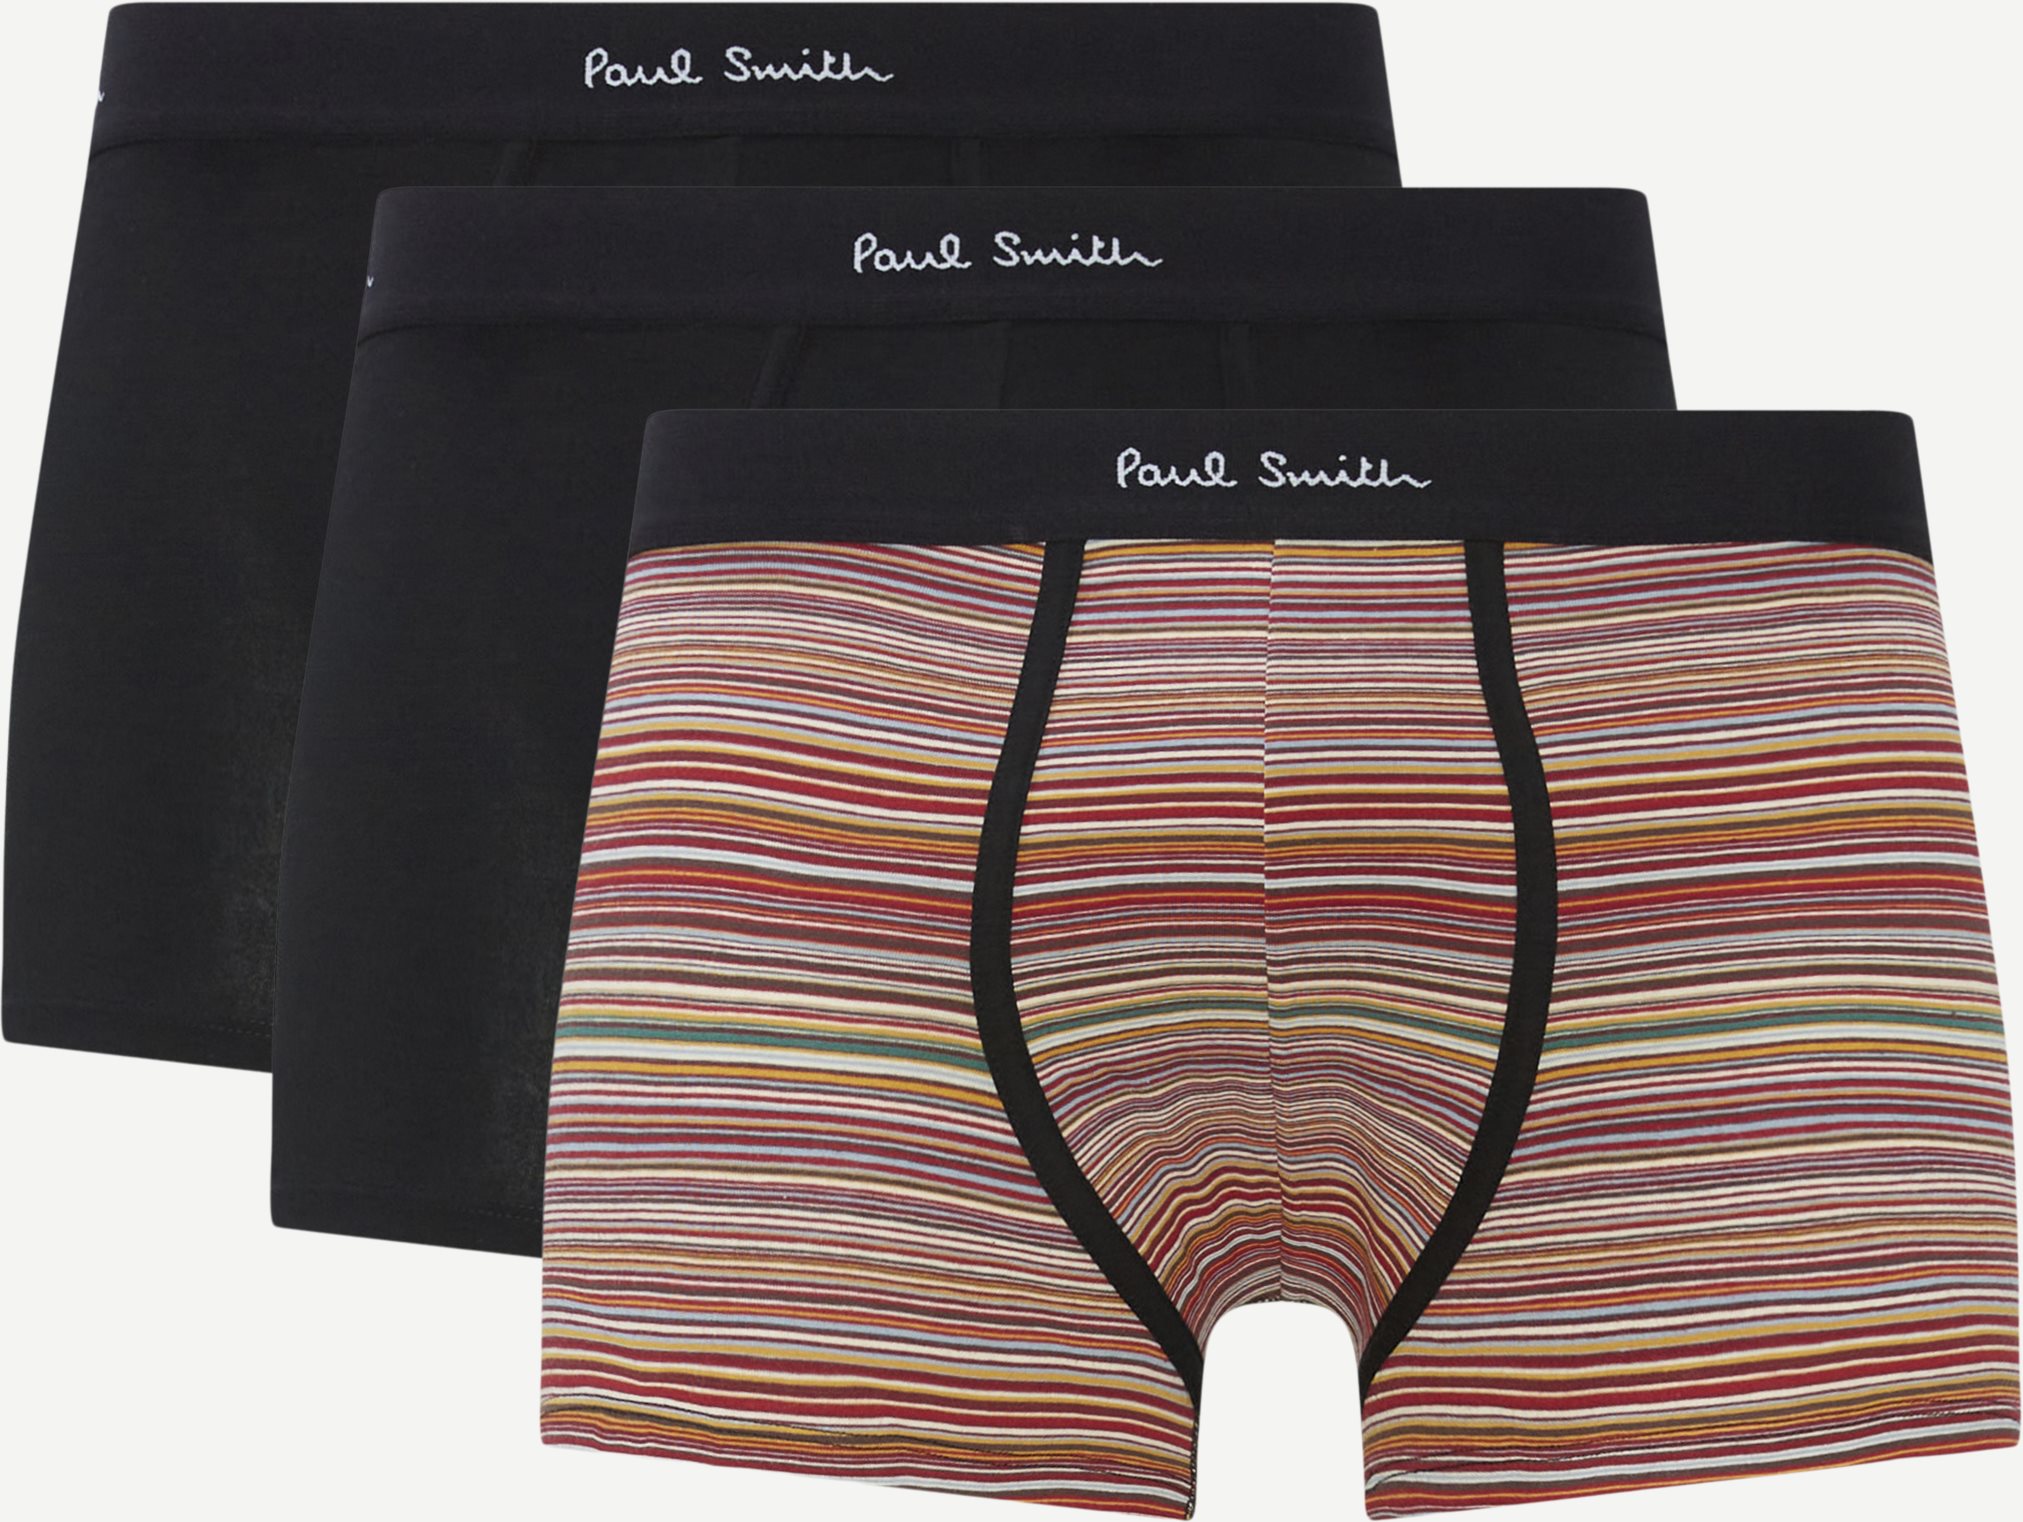 PS Paul Smith Underwear 914-M3PKJ MEN TRUNK 3 PACK BLK SIGN Black